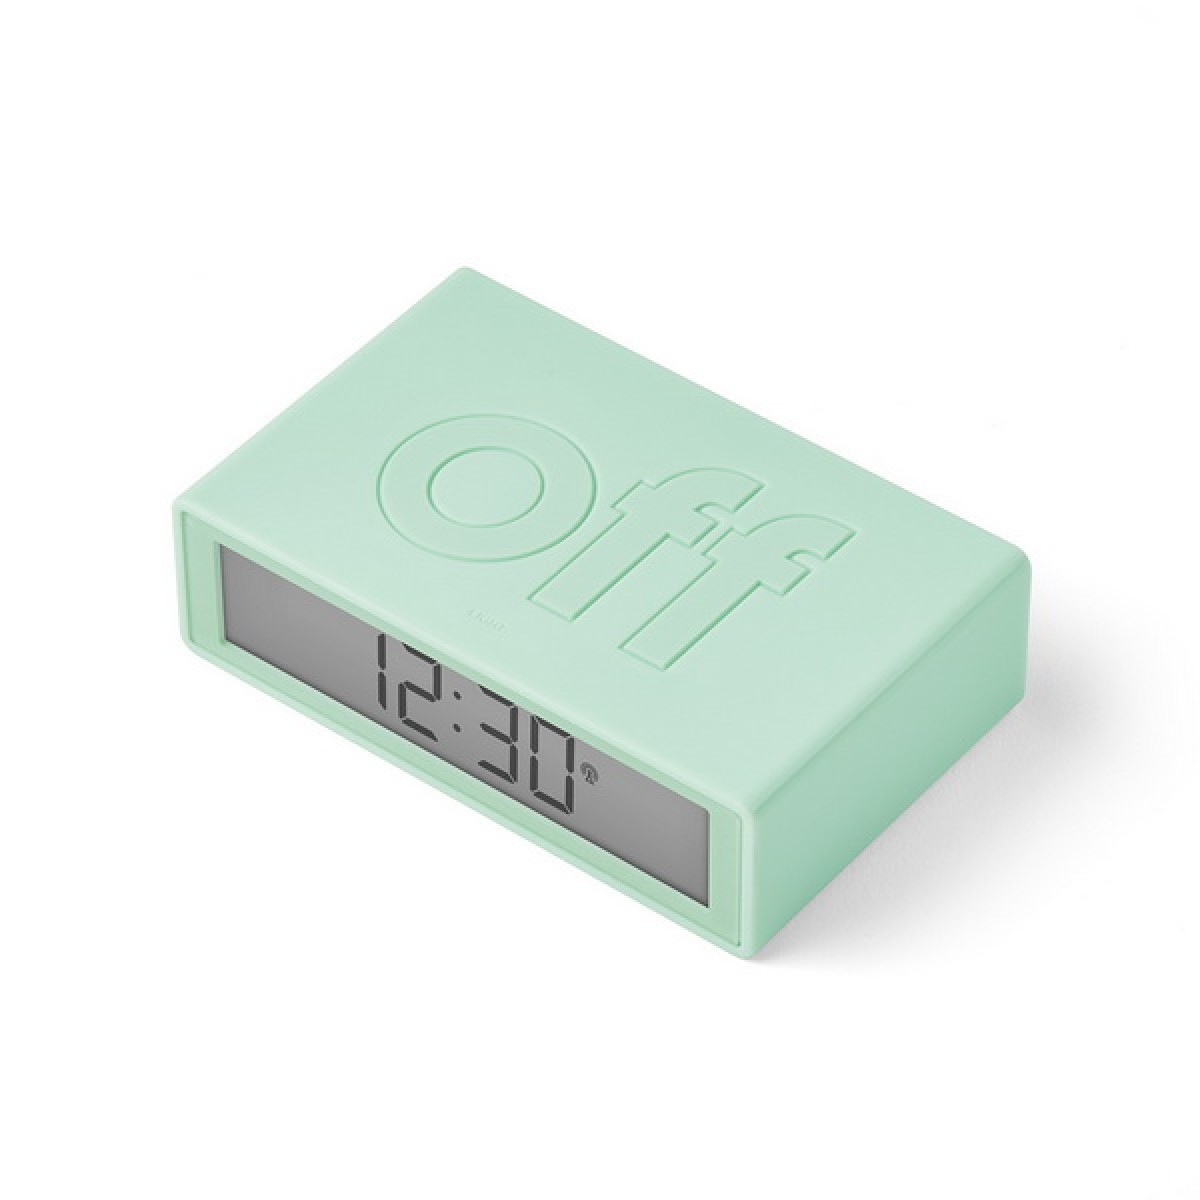 Lexon - Flip - Reversible LCD alarm clock - Mint